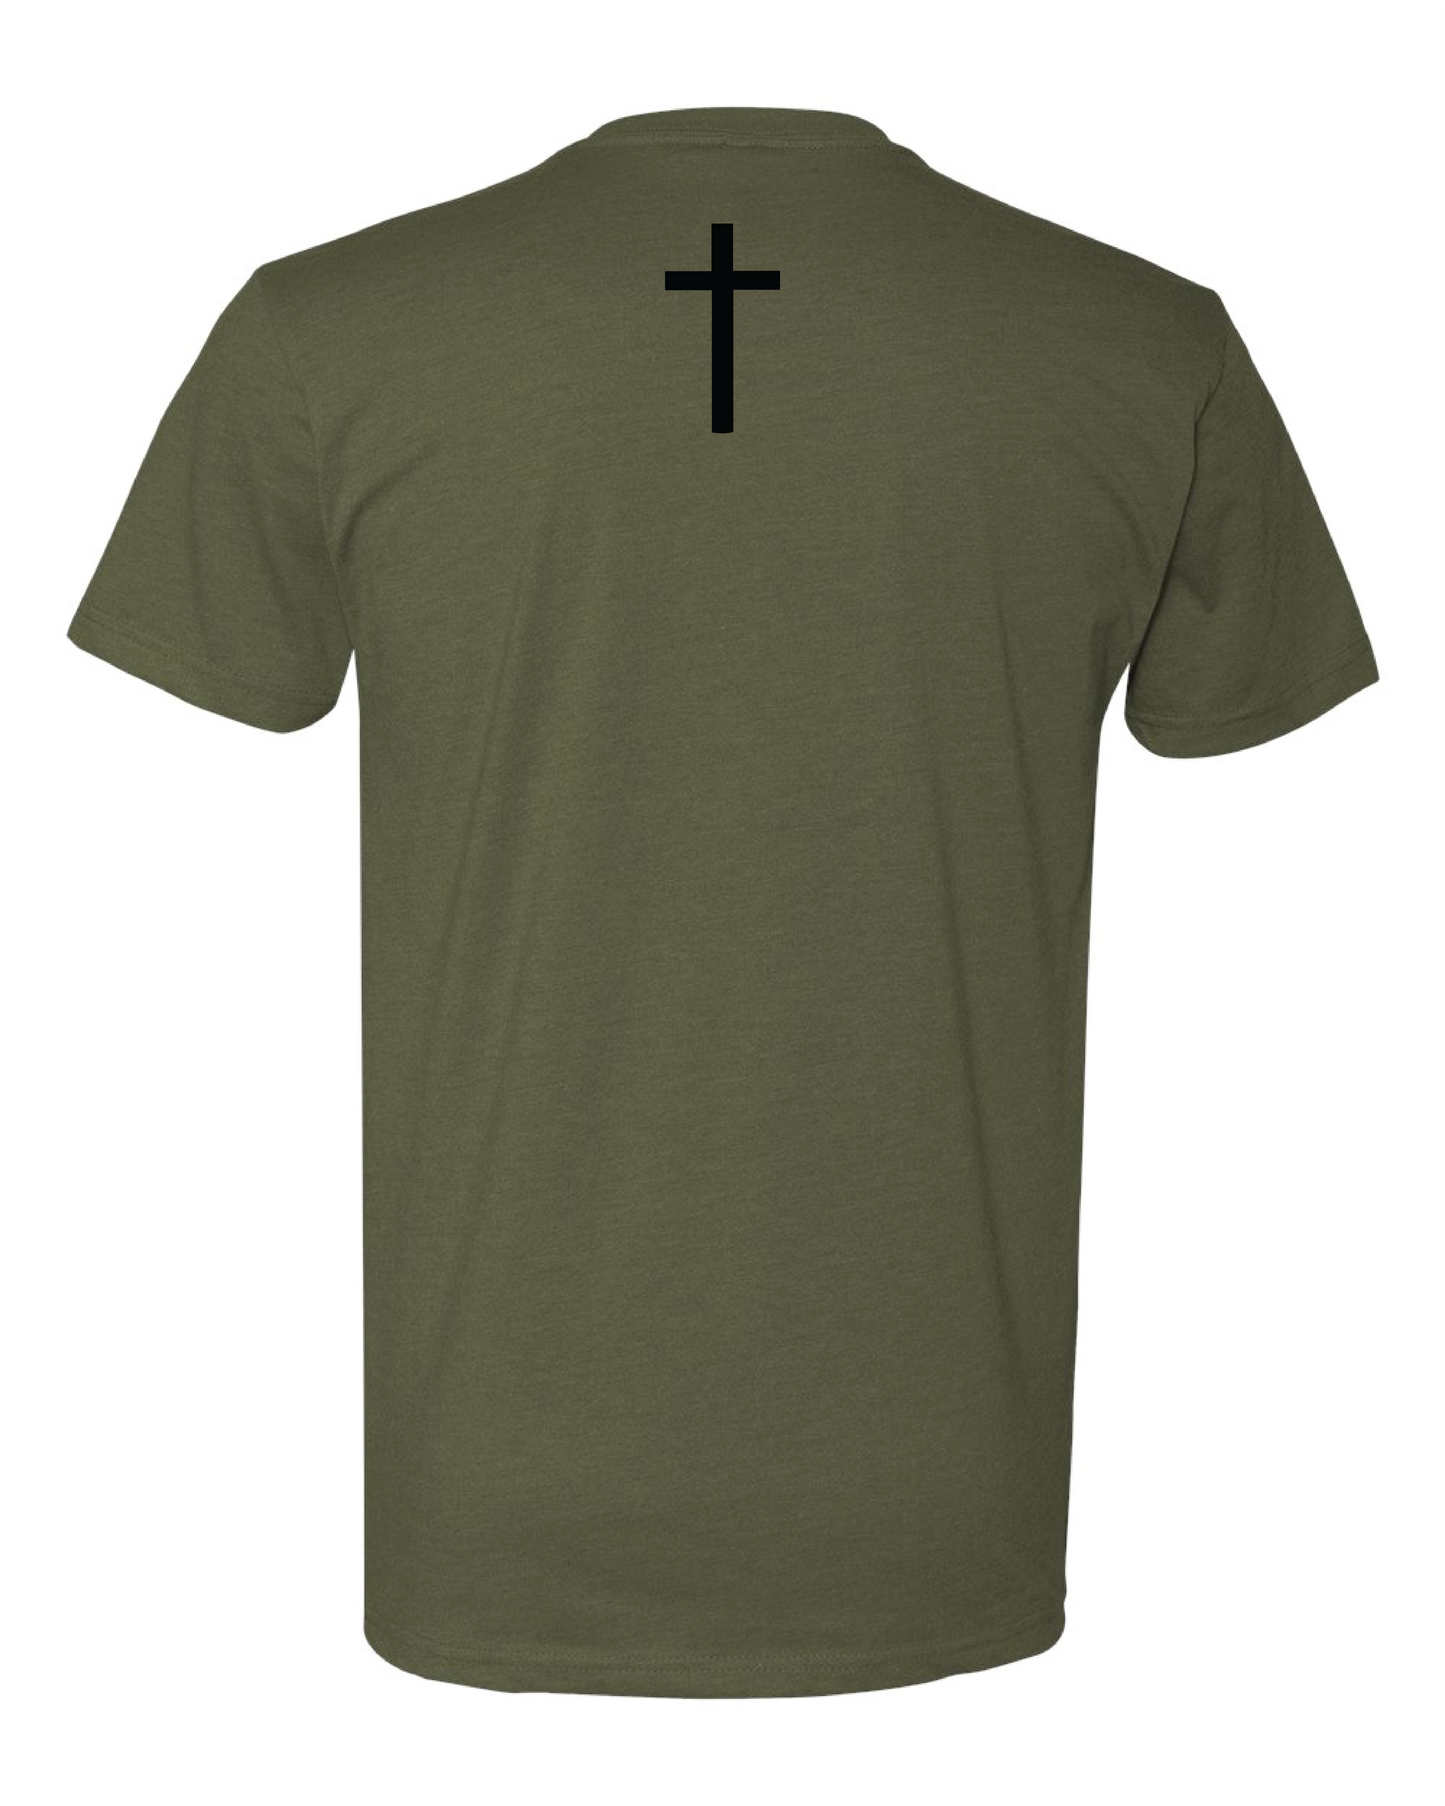 Jesus & Jiu-Jitsu Sleeve T-Shirt